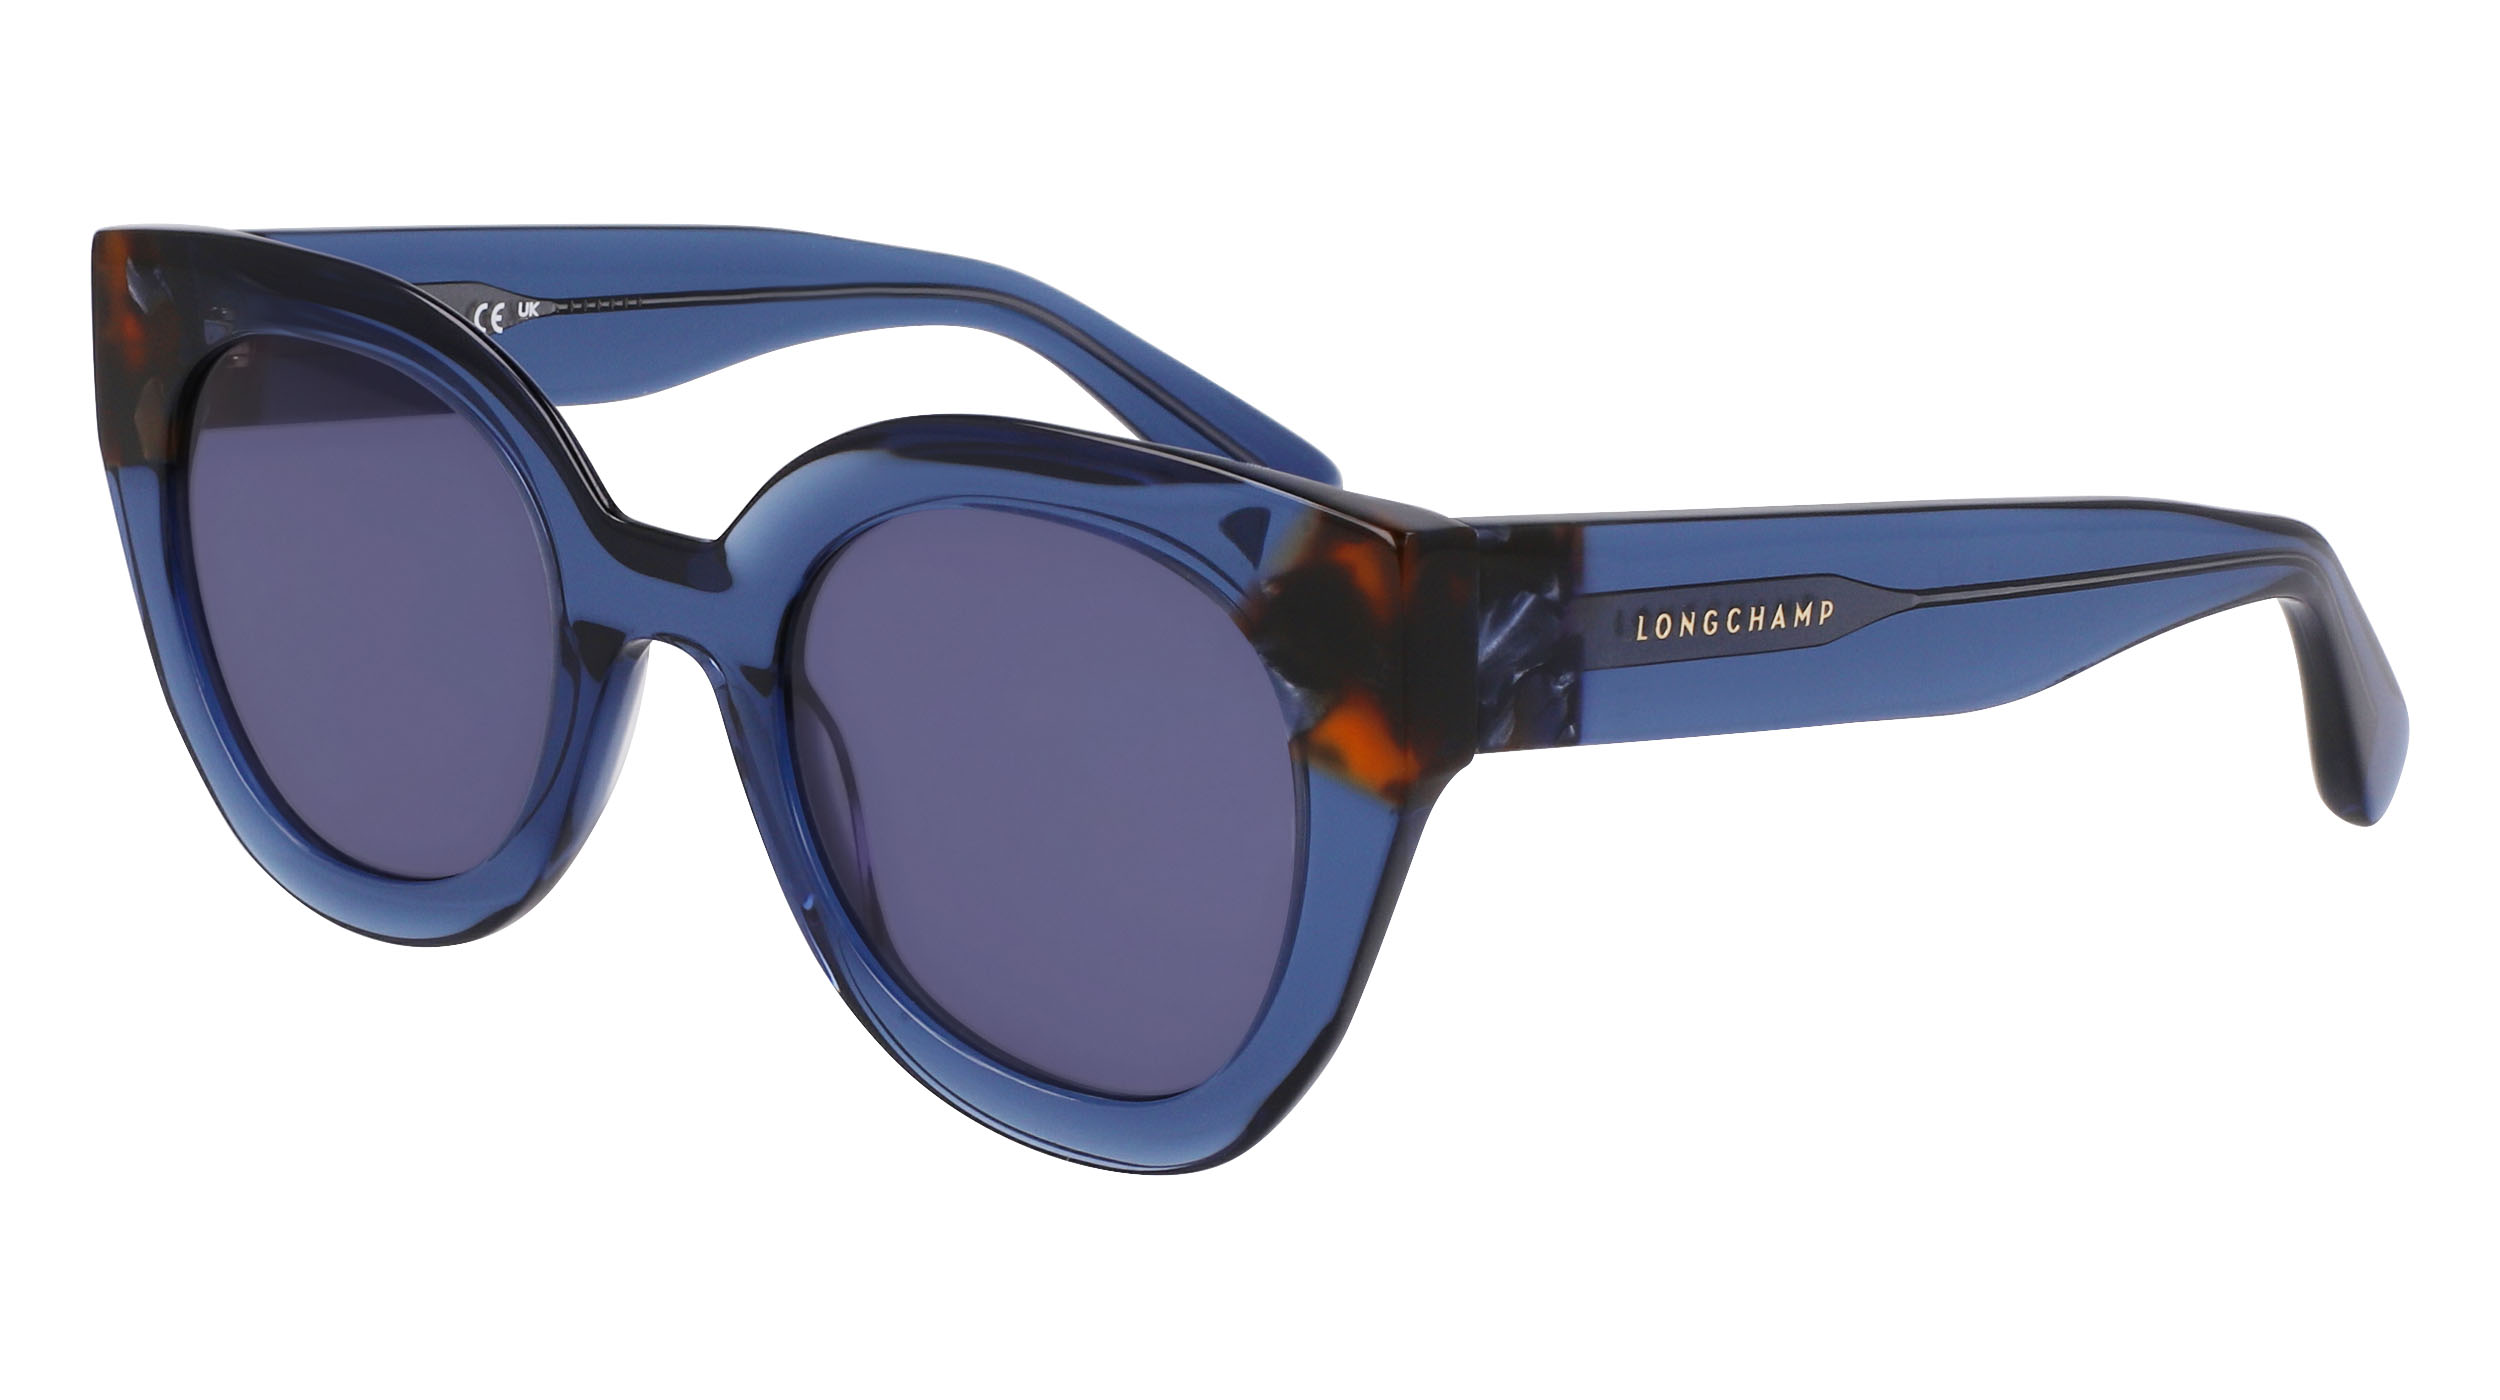 Sunglasses Longchamp Lo750s, dark blue colour - Doyle